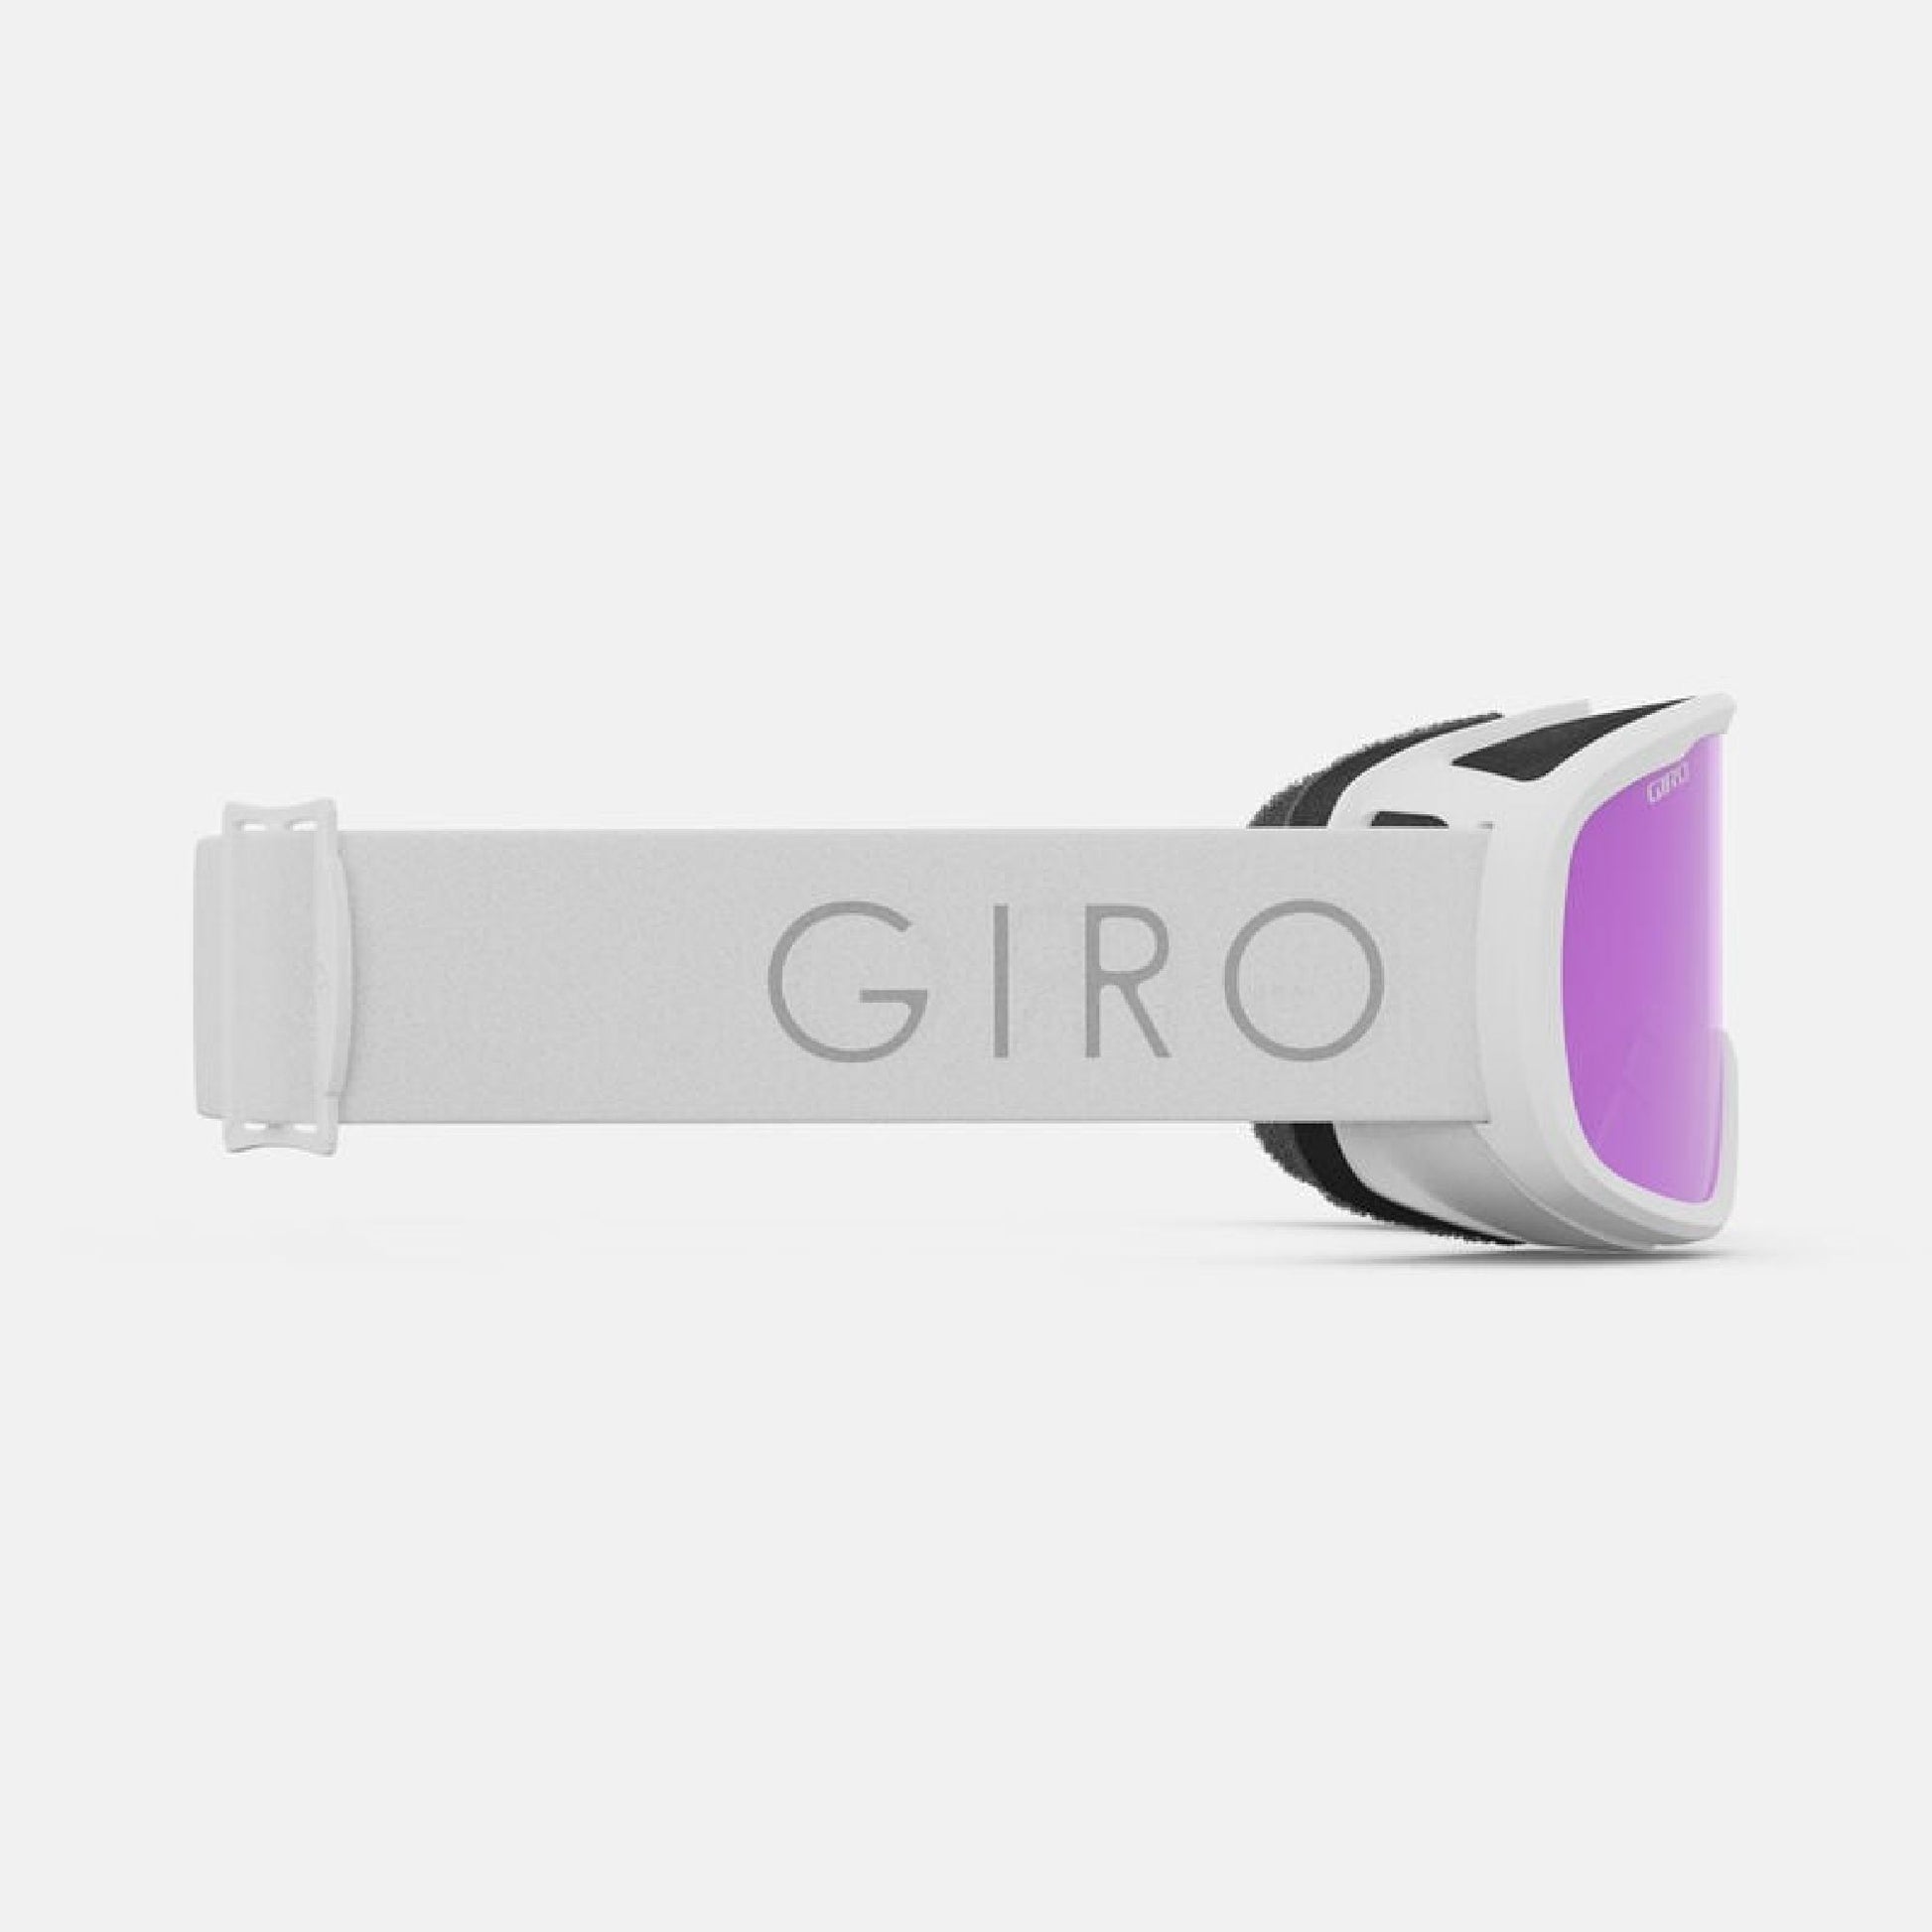 Giro Women's Moxie Snow Goggles White Core Light Amber Pink Snow Goggles